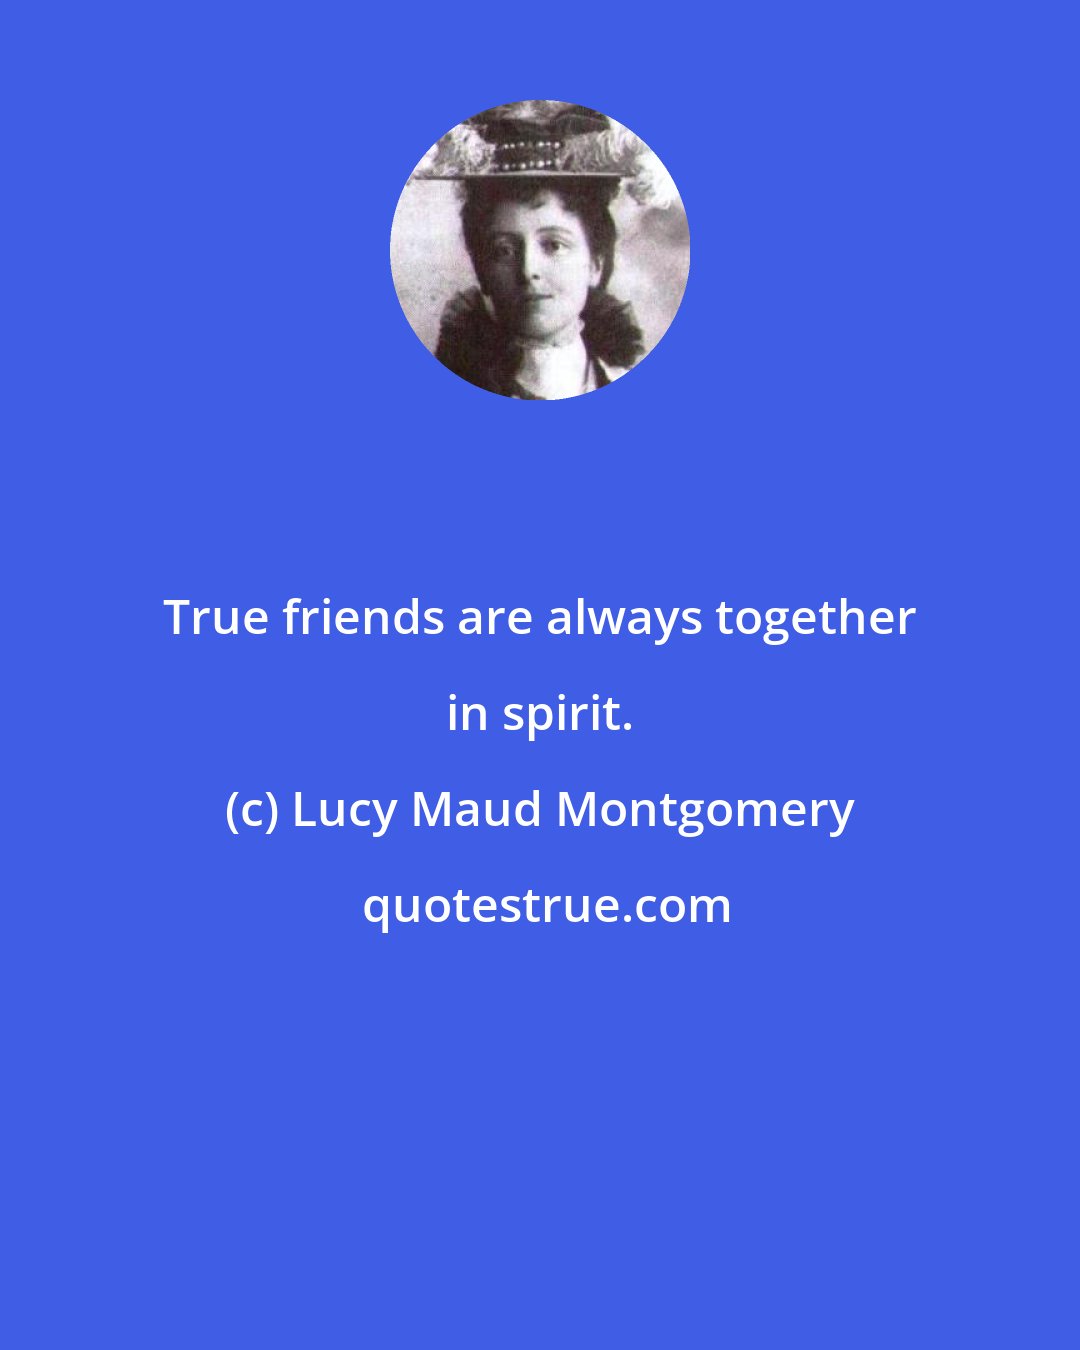 Lucy Maud Montgomery: True friends are always together in spirit.